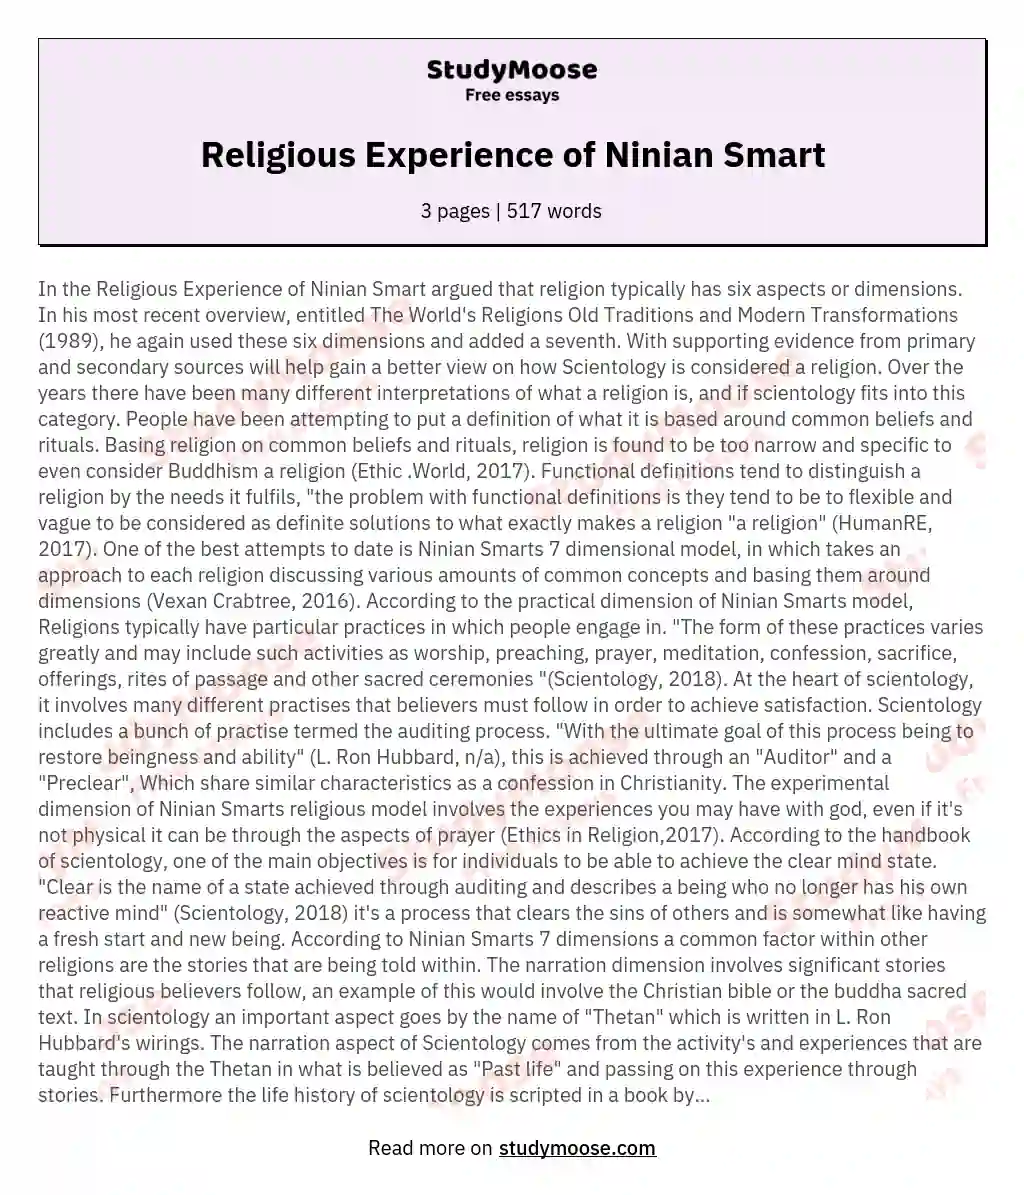 Religious Experience of Ninian Smart essay